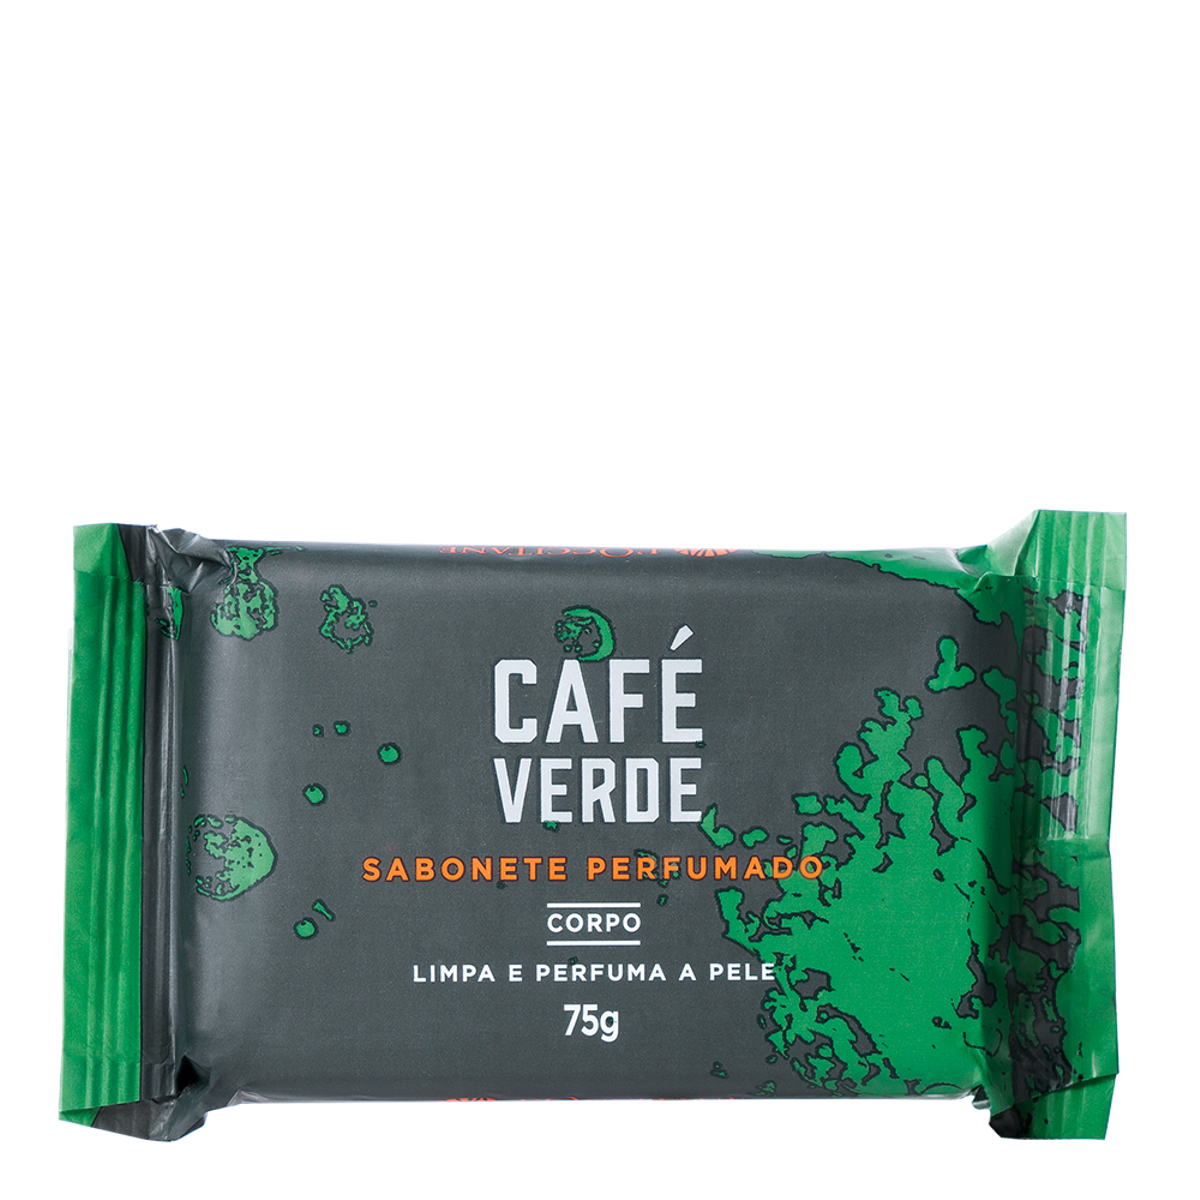 Sabonete Perfumado Café Verde, ,  large image number 0